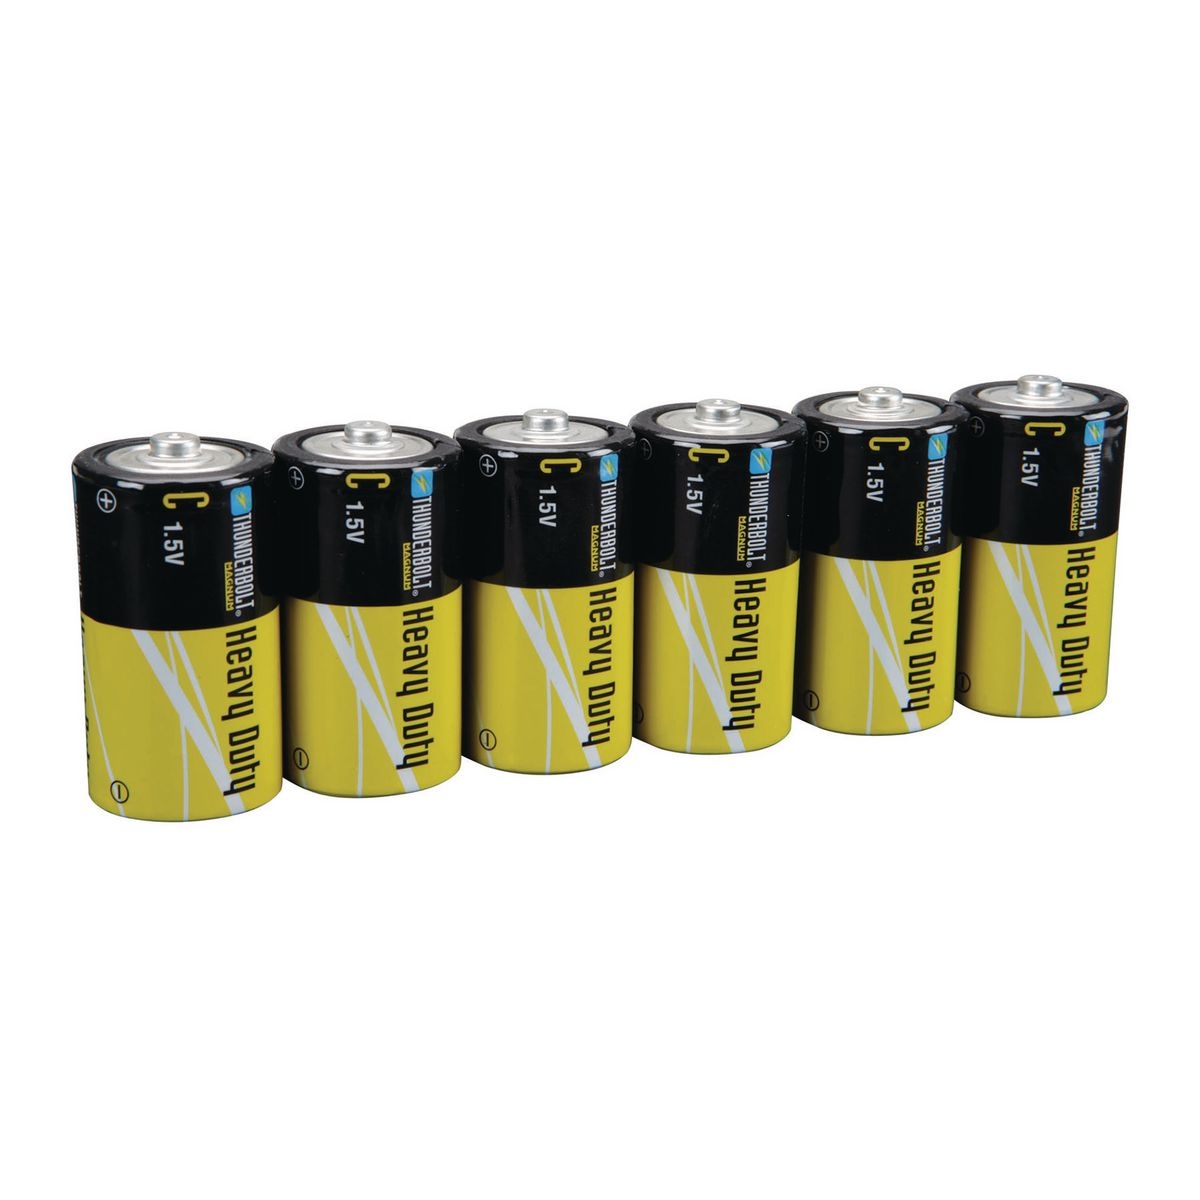 THUNDERBOLT Heavy Duty Batteries C - 6 PK – Item 61274 / 68384 / 61679